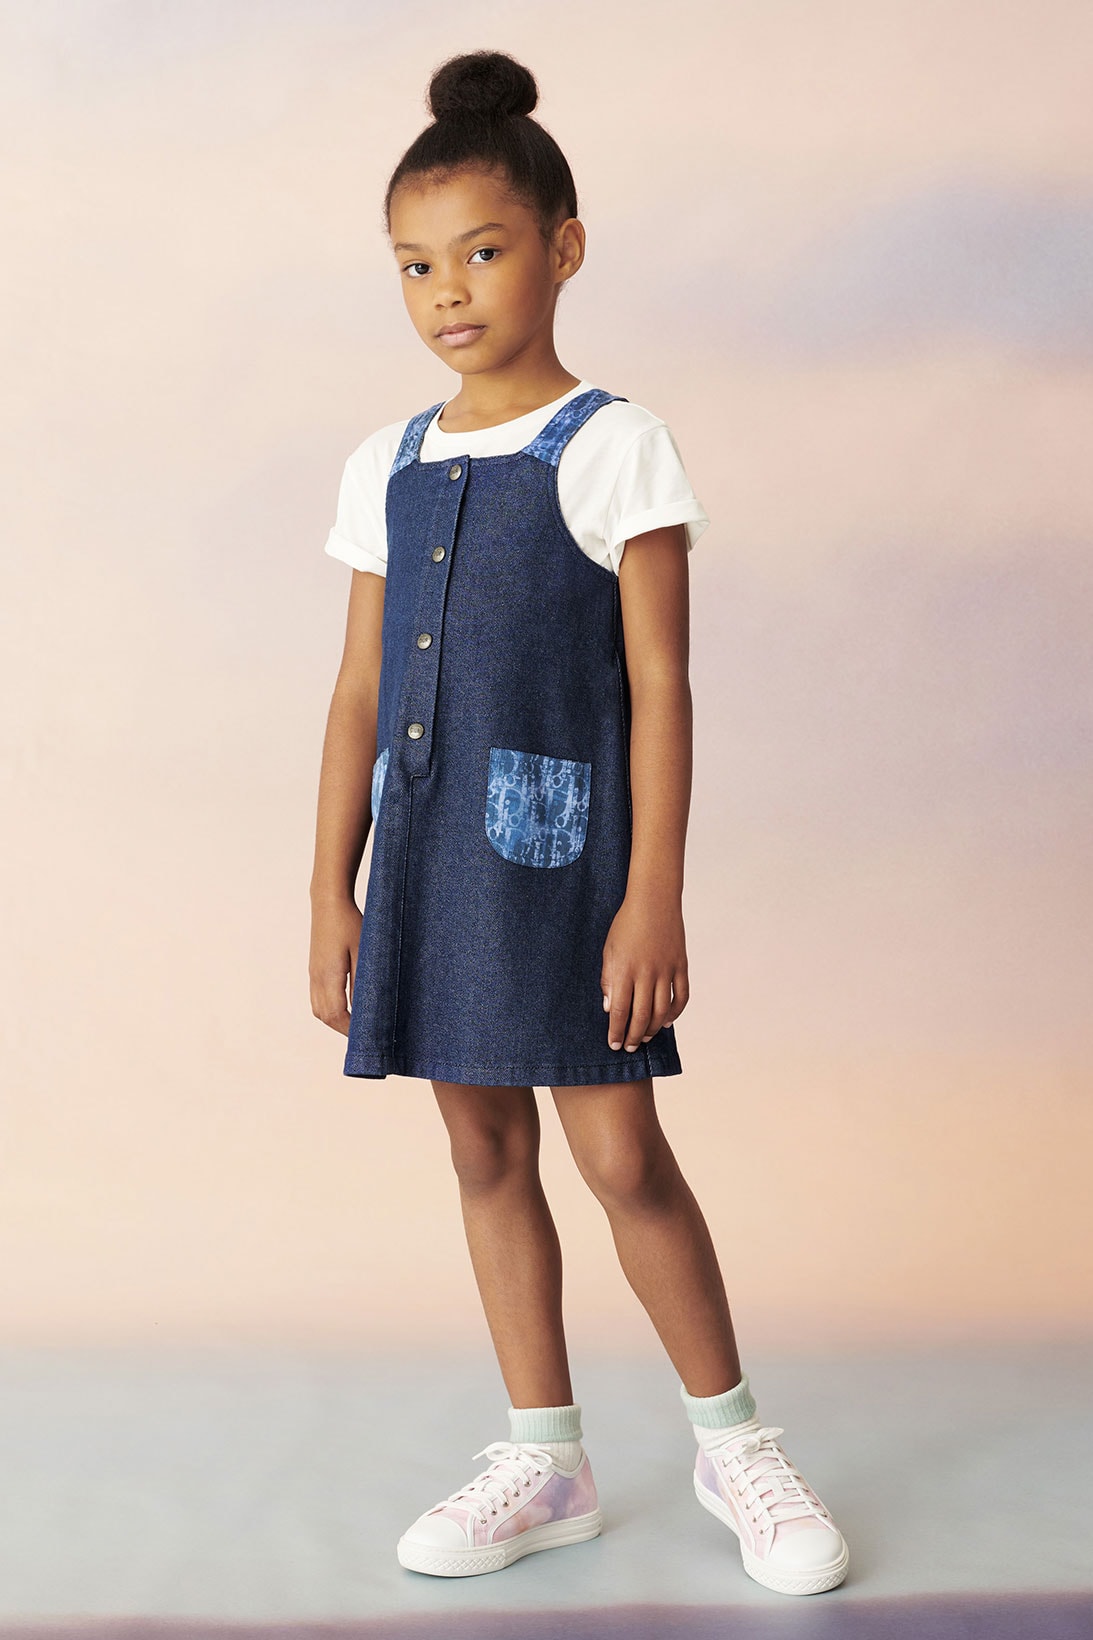 dior spring summer 2021 ss21 kids collection denim dress overall skirt